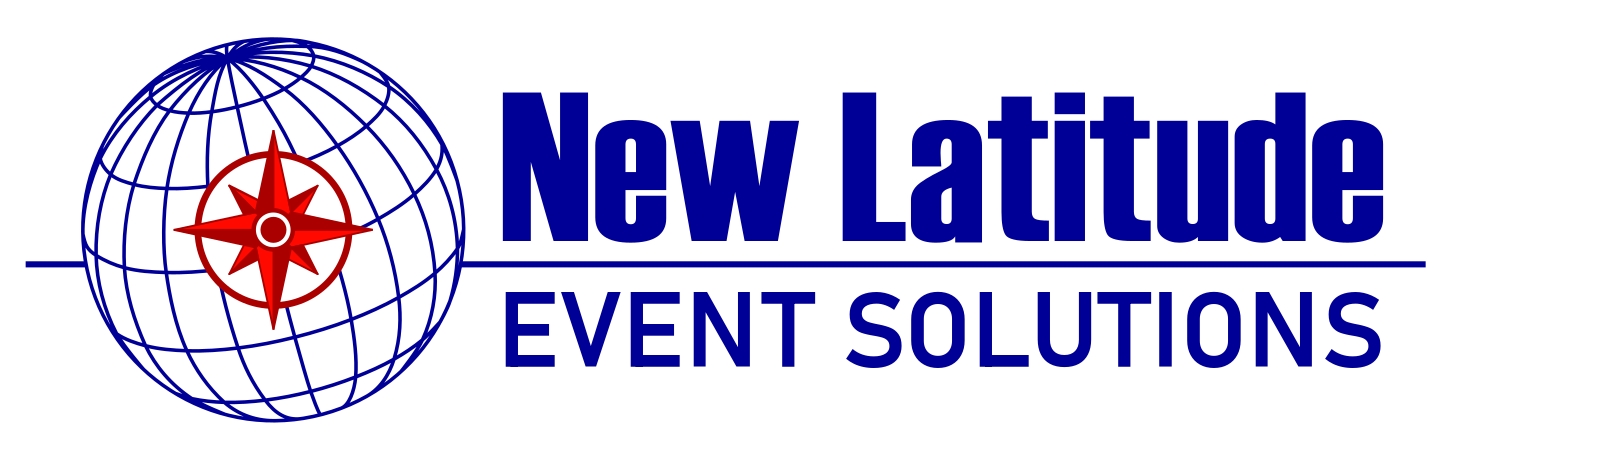 New Latitude Event Solutions